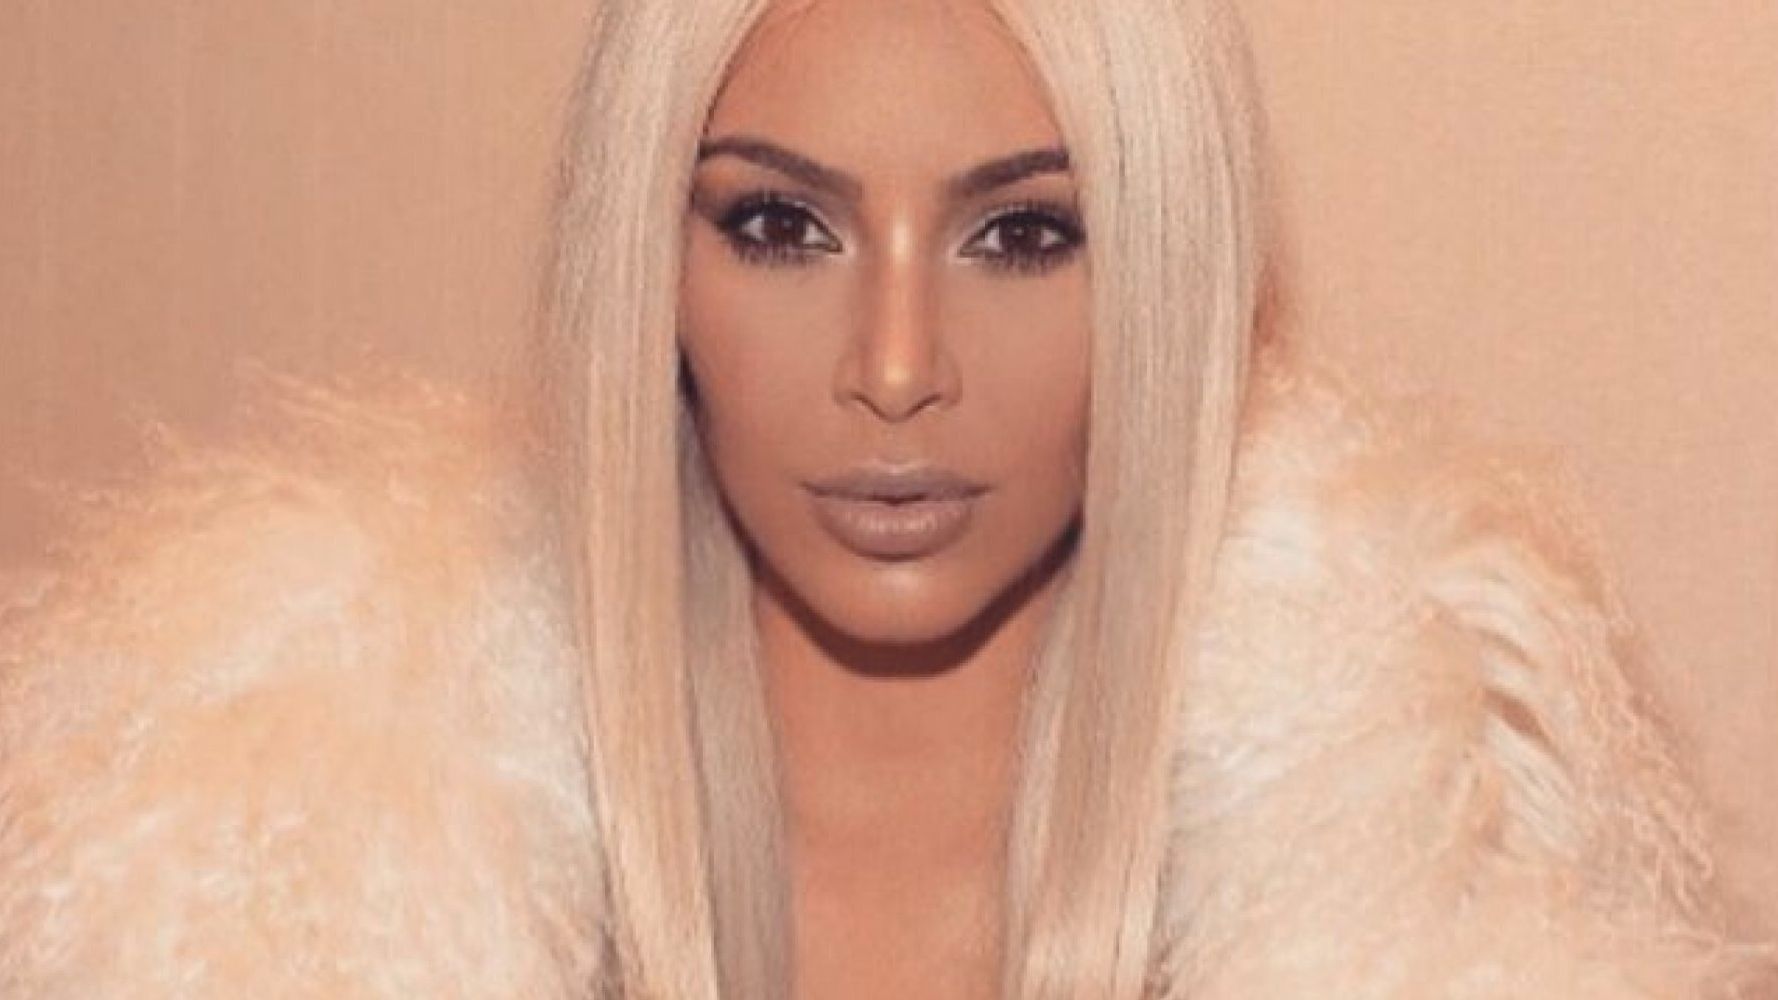 Cut the Tape: How to Mimic Kim Kardashian's Cleavage Trick - ahead